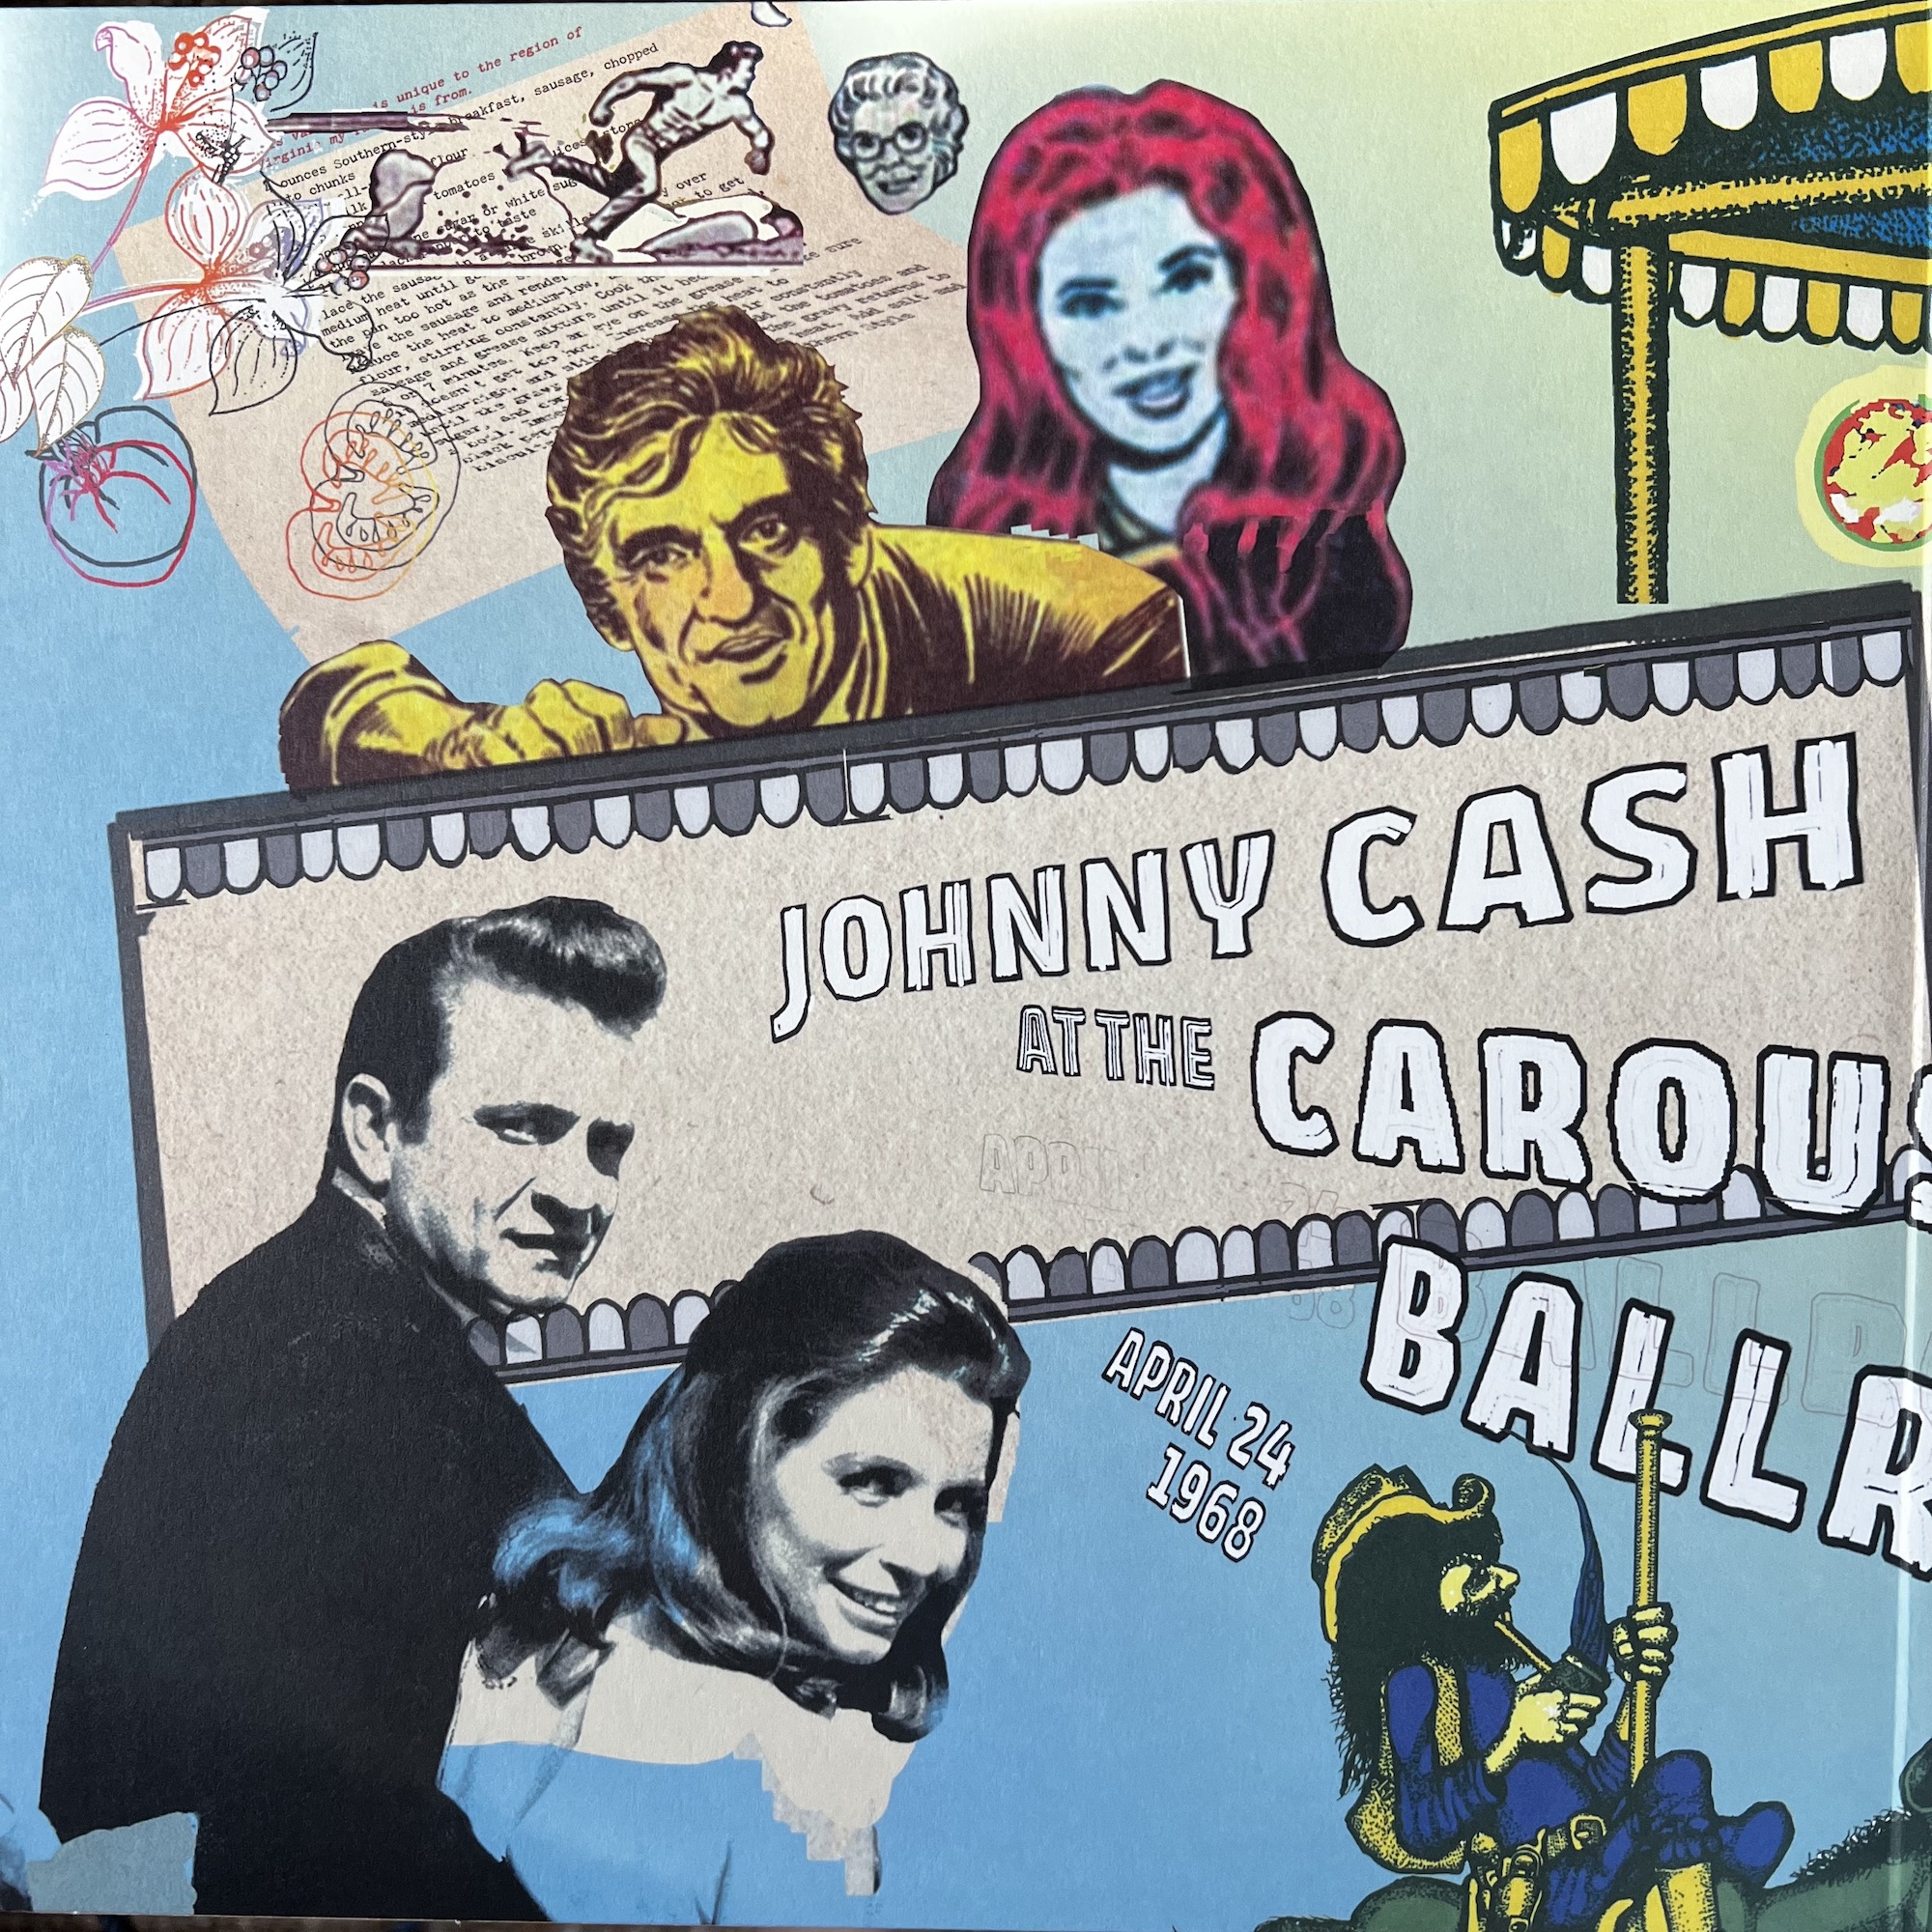 Johnny Cash at the Carousel Ballroom gatefold